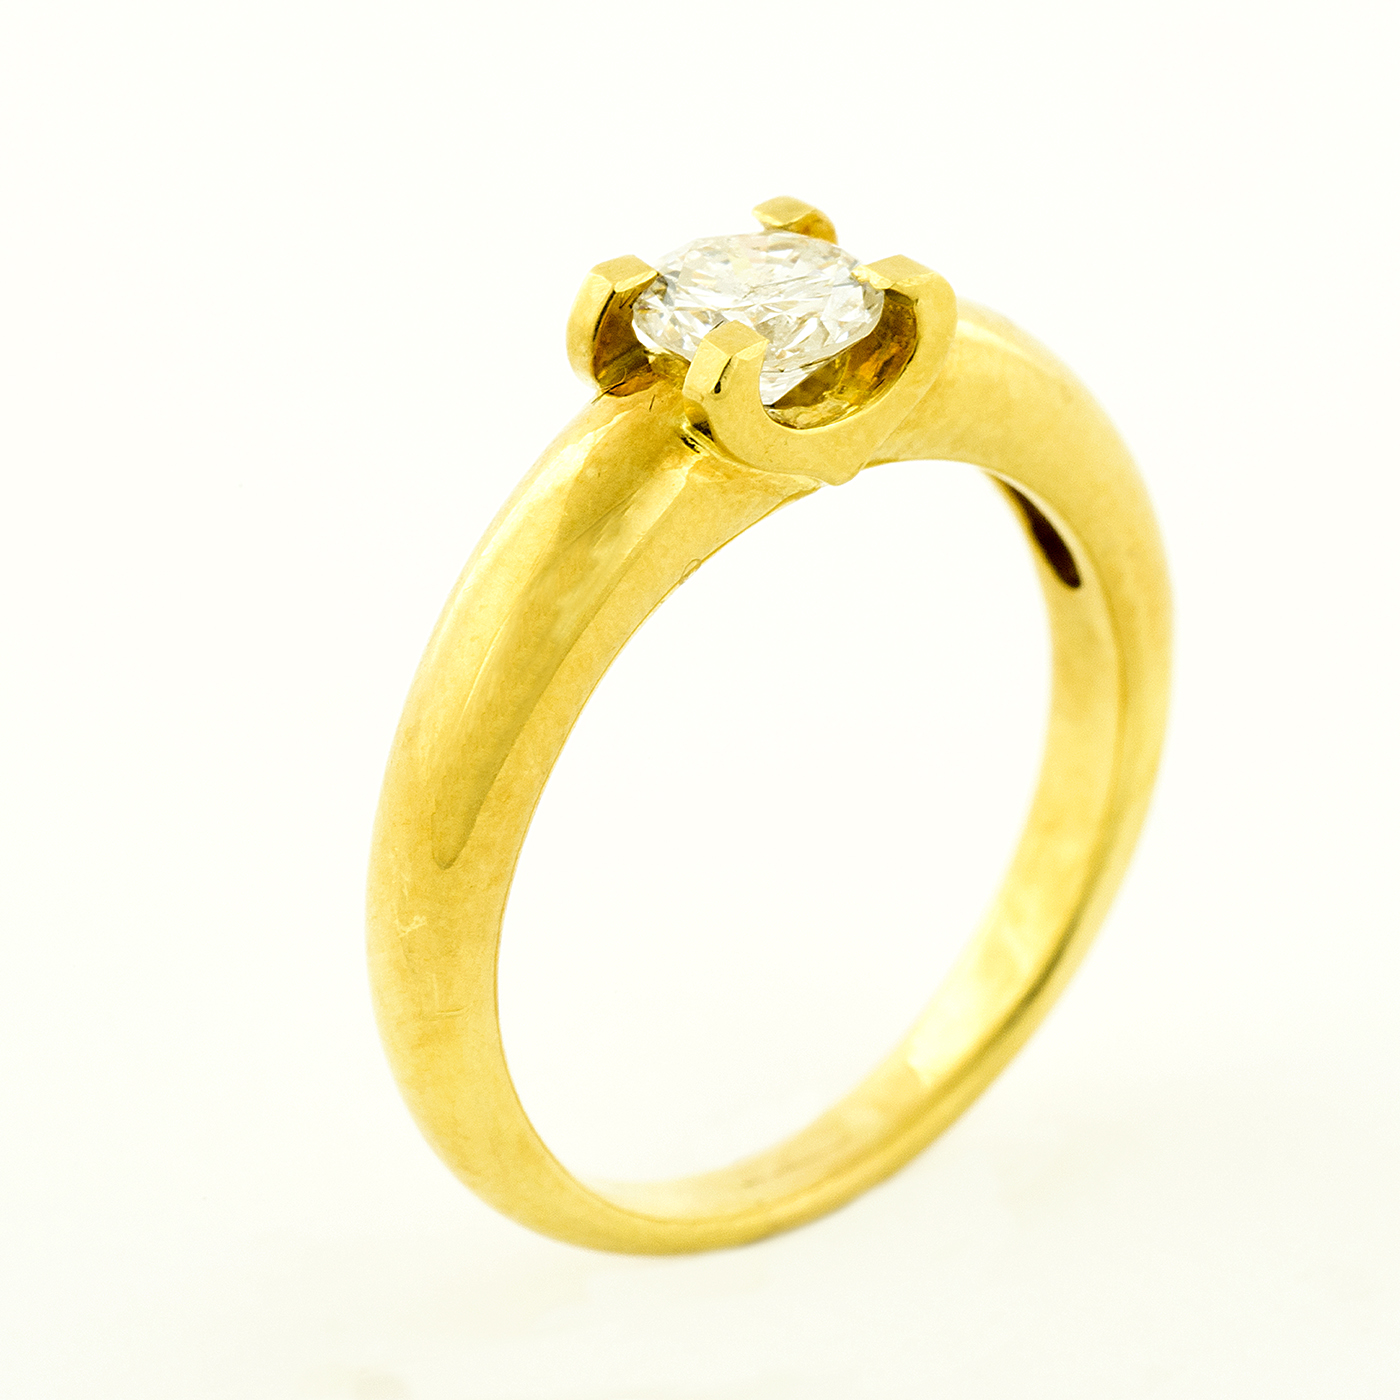 Anillo Solitario en Oro de 18k con Diamante Natural Talla Brillante de 0,55 ct. (I-J/SI2).